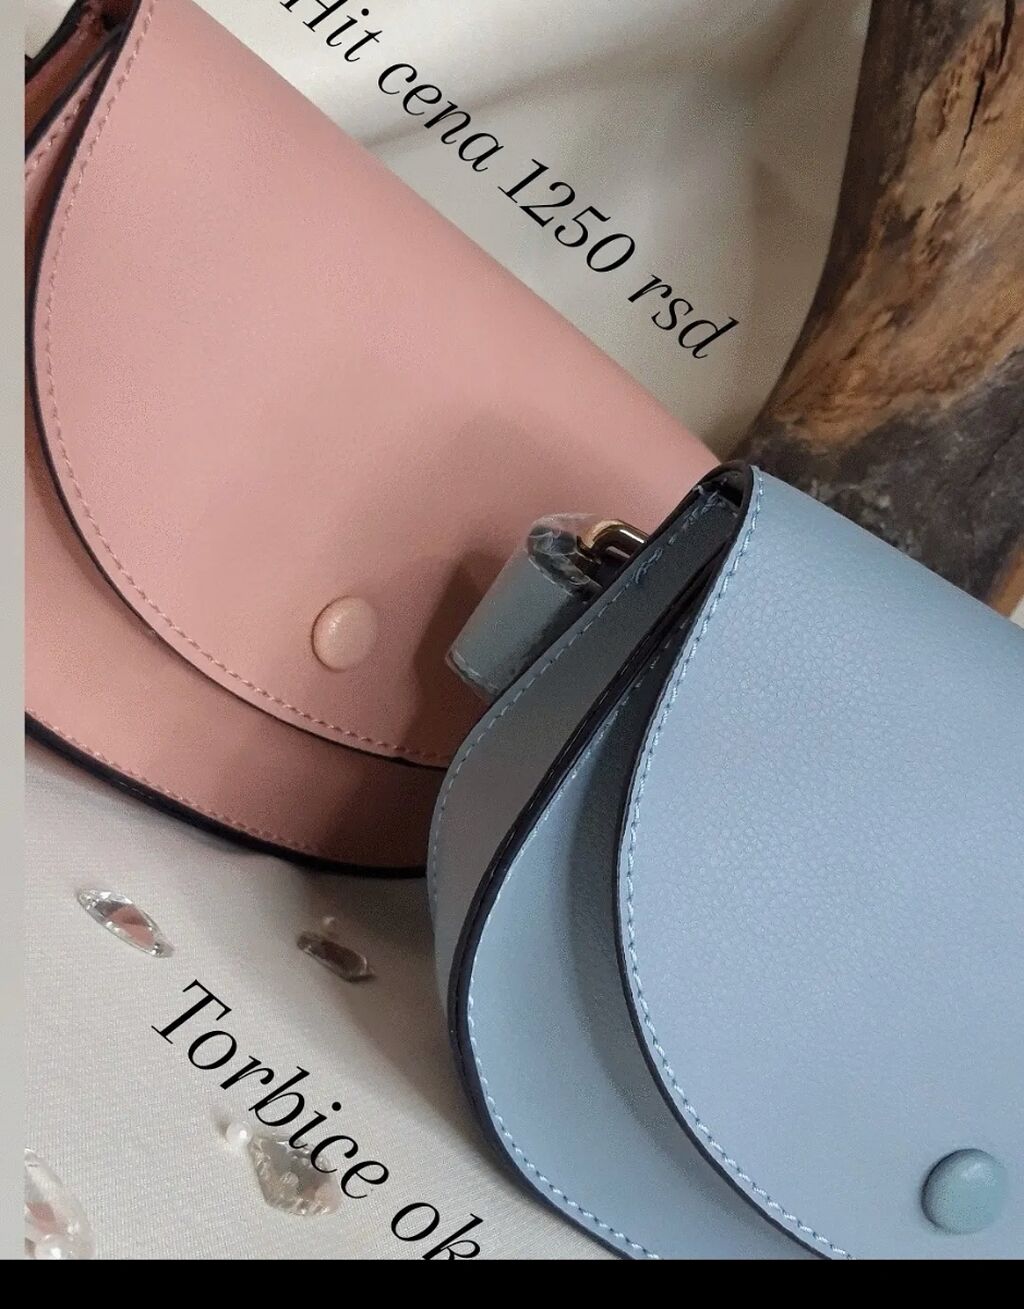 Louis Vuitton muska torba - KupujemProdajem